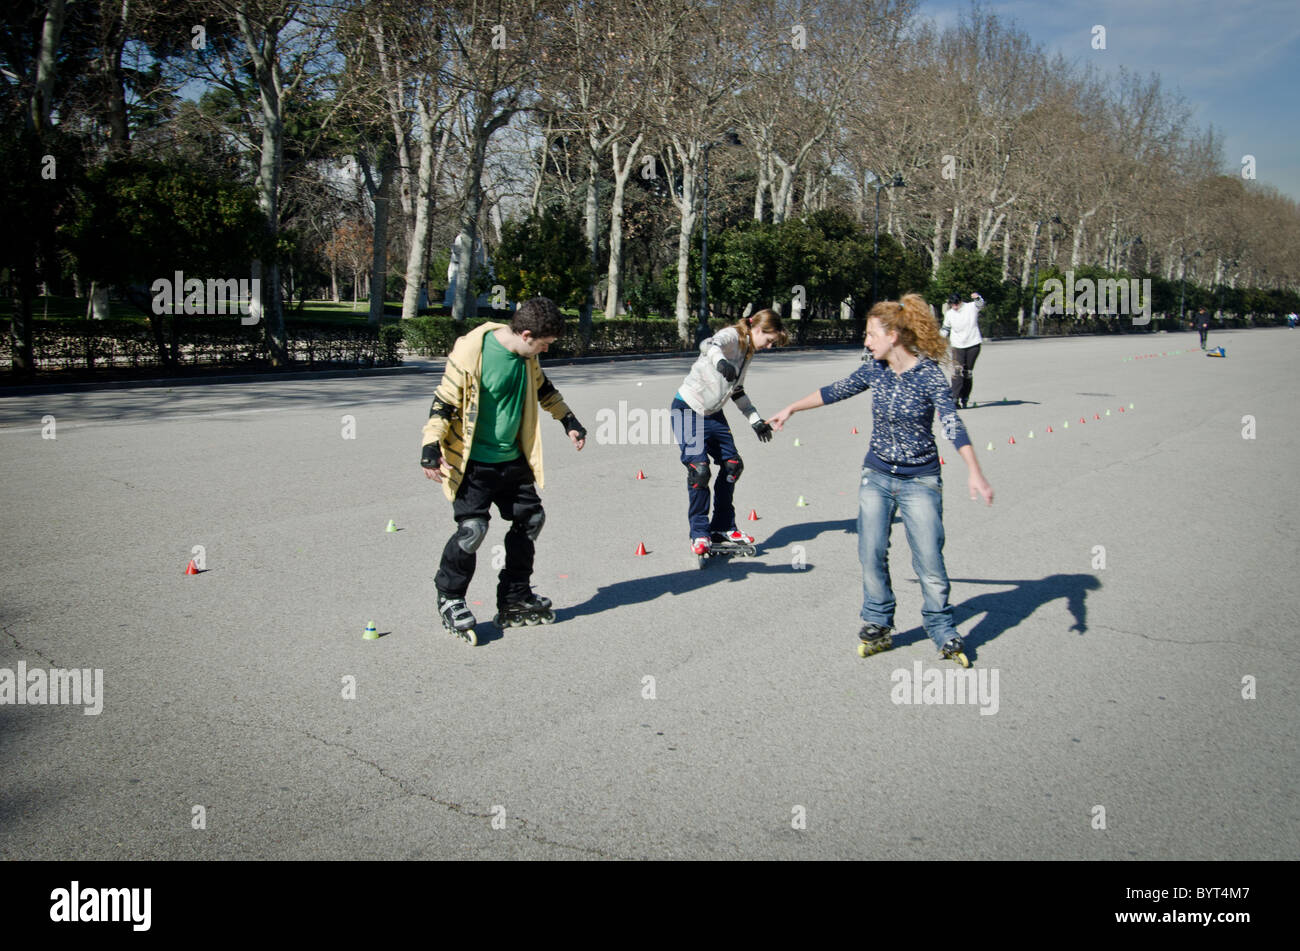 Roller bladders practicing, Retiro Park, Madrid, Spain Stock Photo